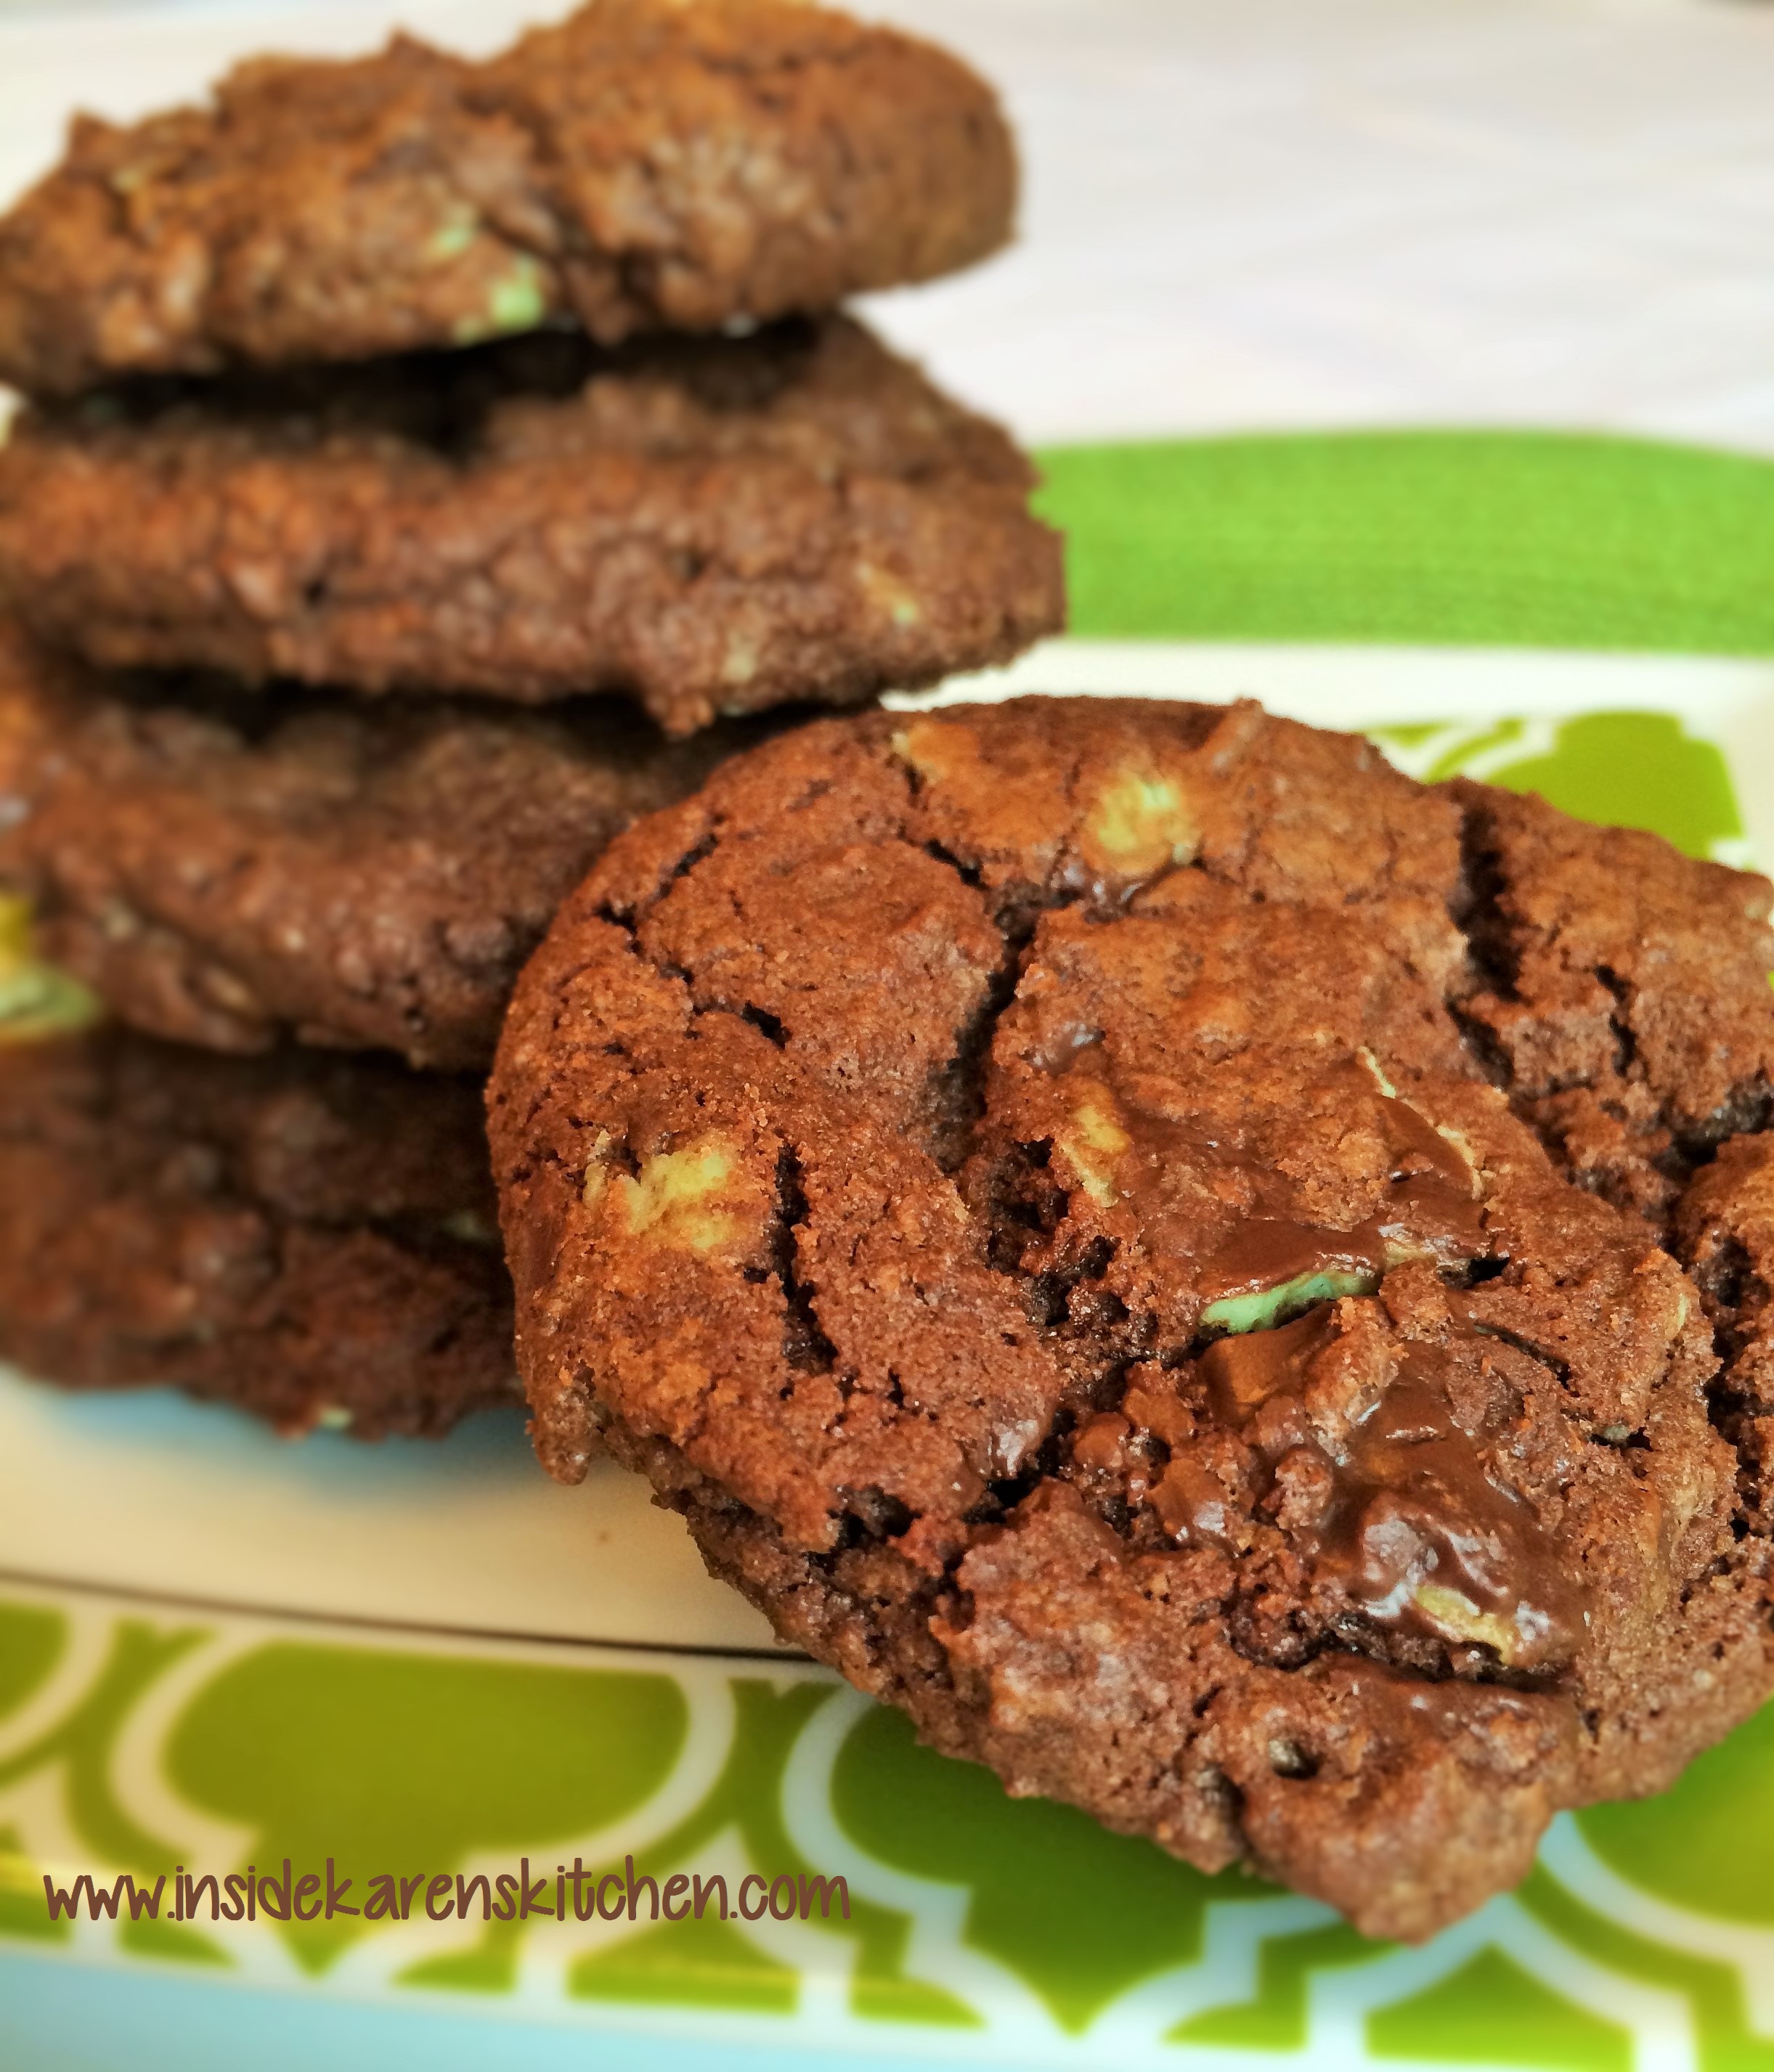 https://karenmangum.com/wp-content/uploads/2014/12/Chocolate-Mint-Truffle-Cookies.jpg